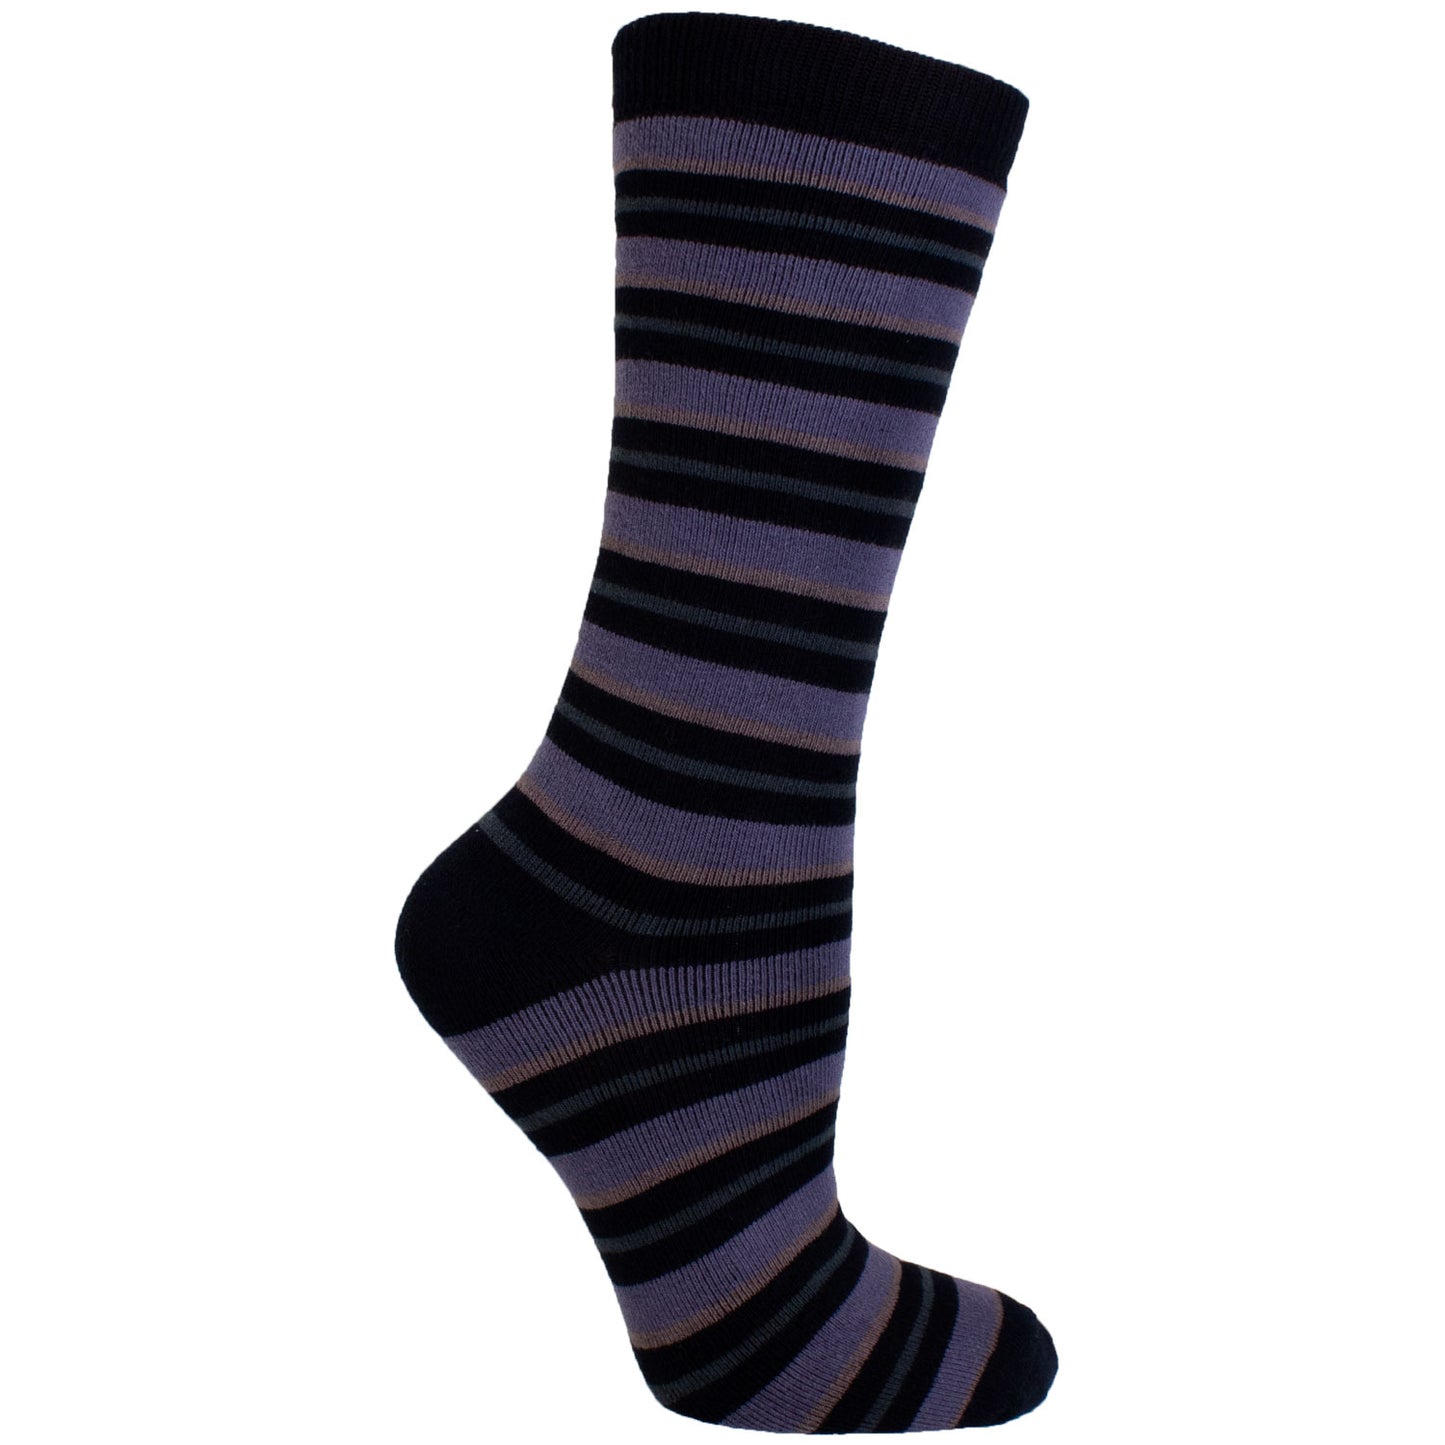 Men's Socks Athletic Sport Performance Durable Striped Mid Calf Crew Socks Black